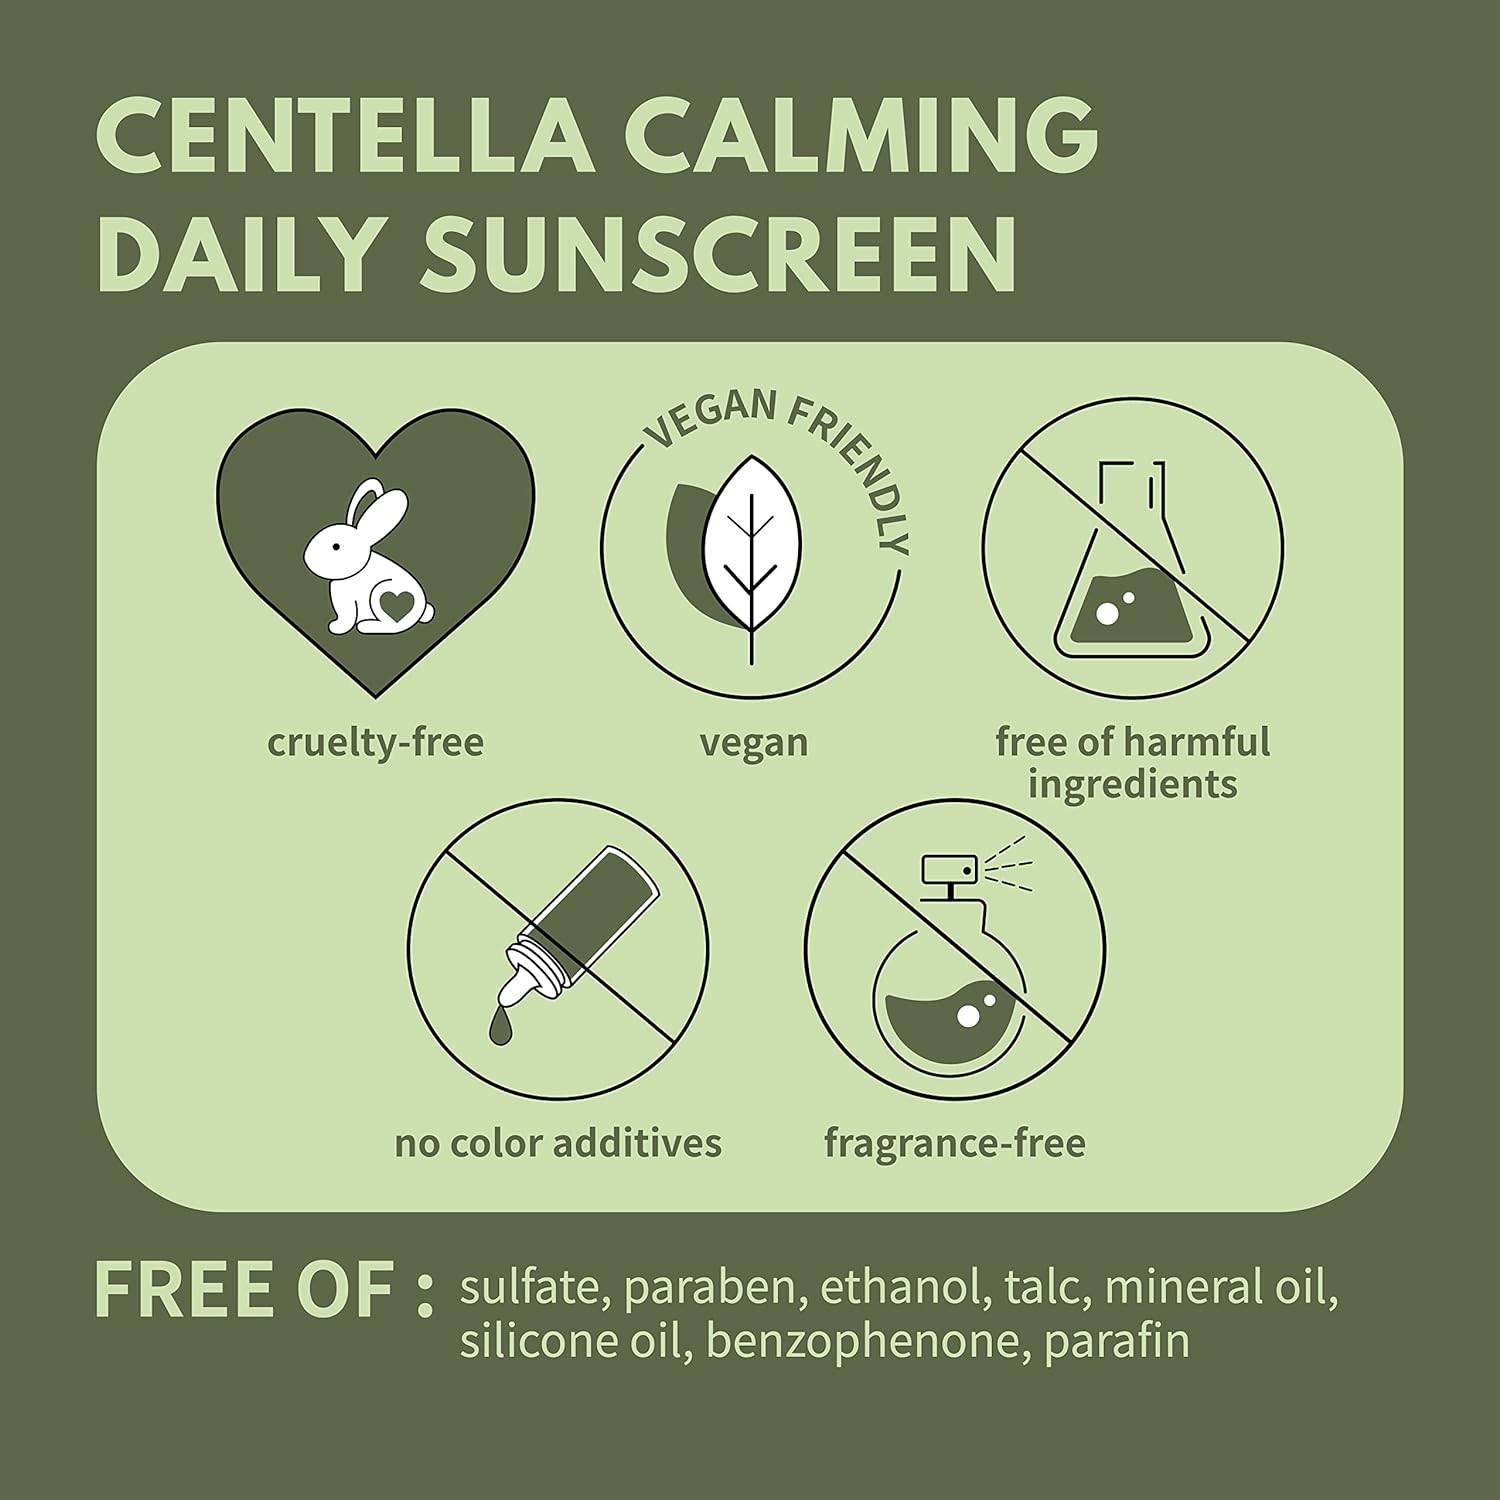 Iunik Centella Calming Daily Sunscreen SPF 50+ PA++++  